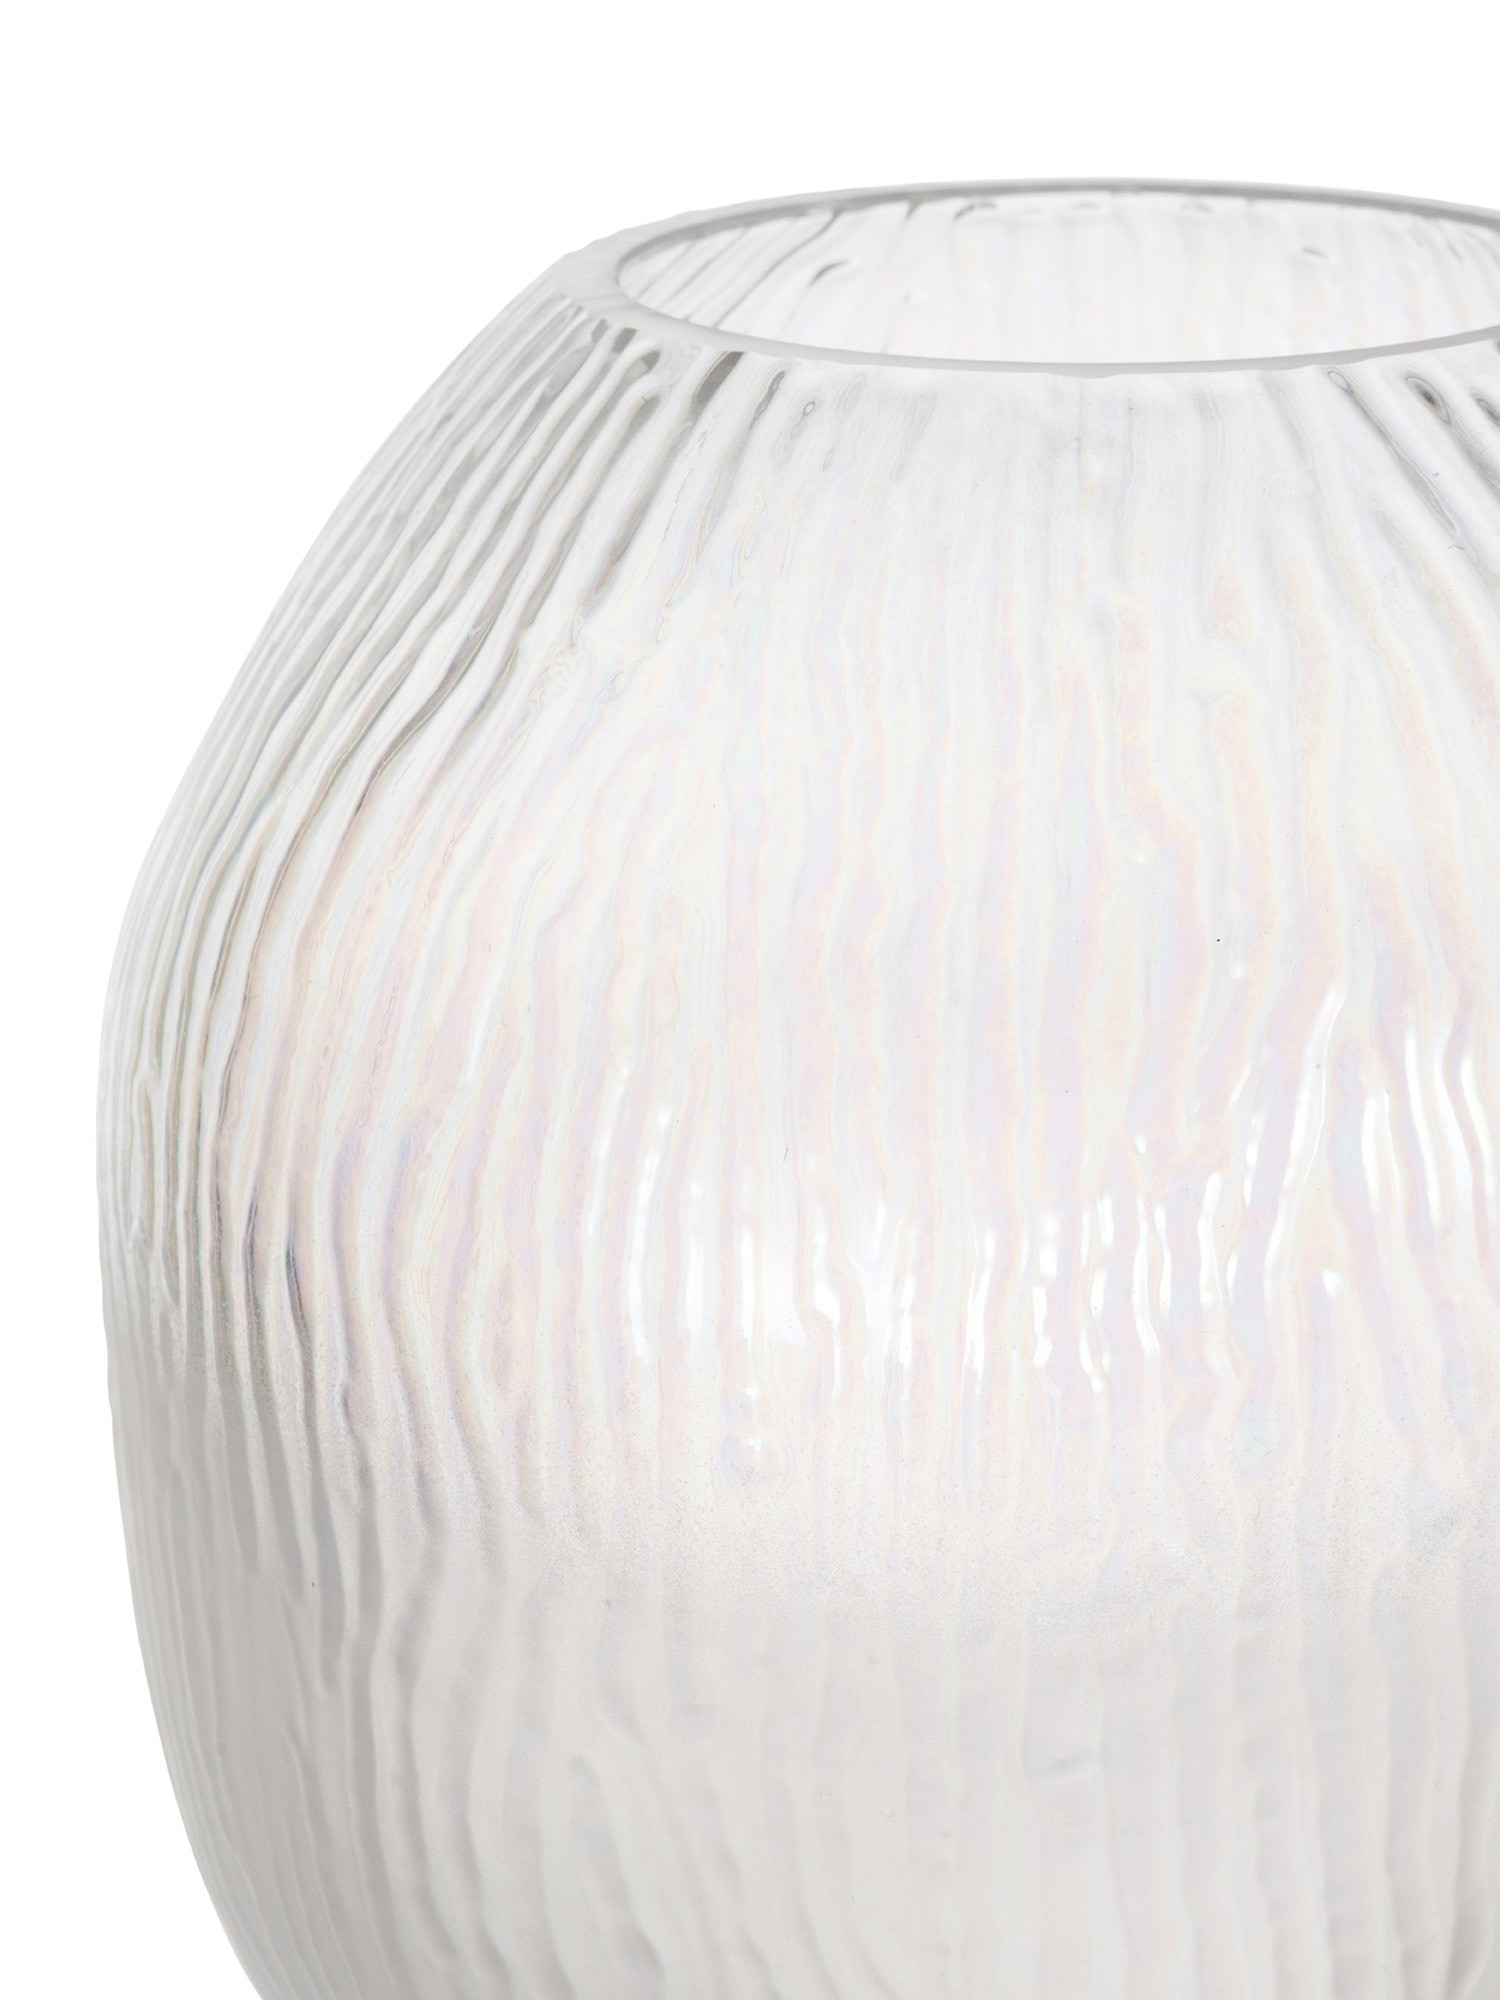 Vaso vetro opalescente, Bianco, large image number 1